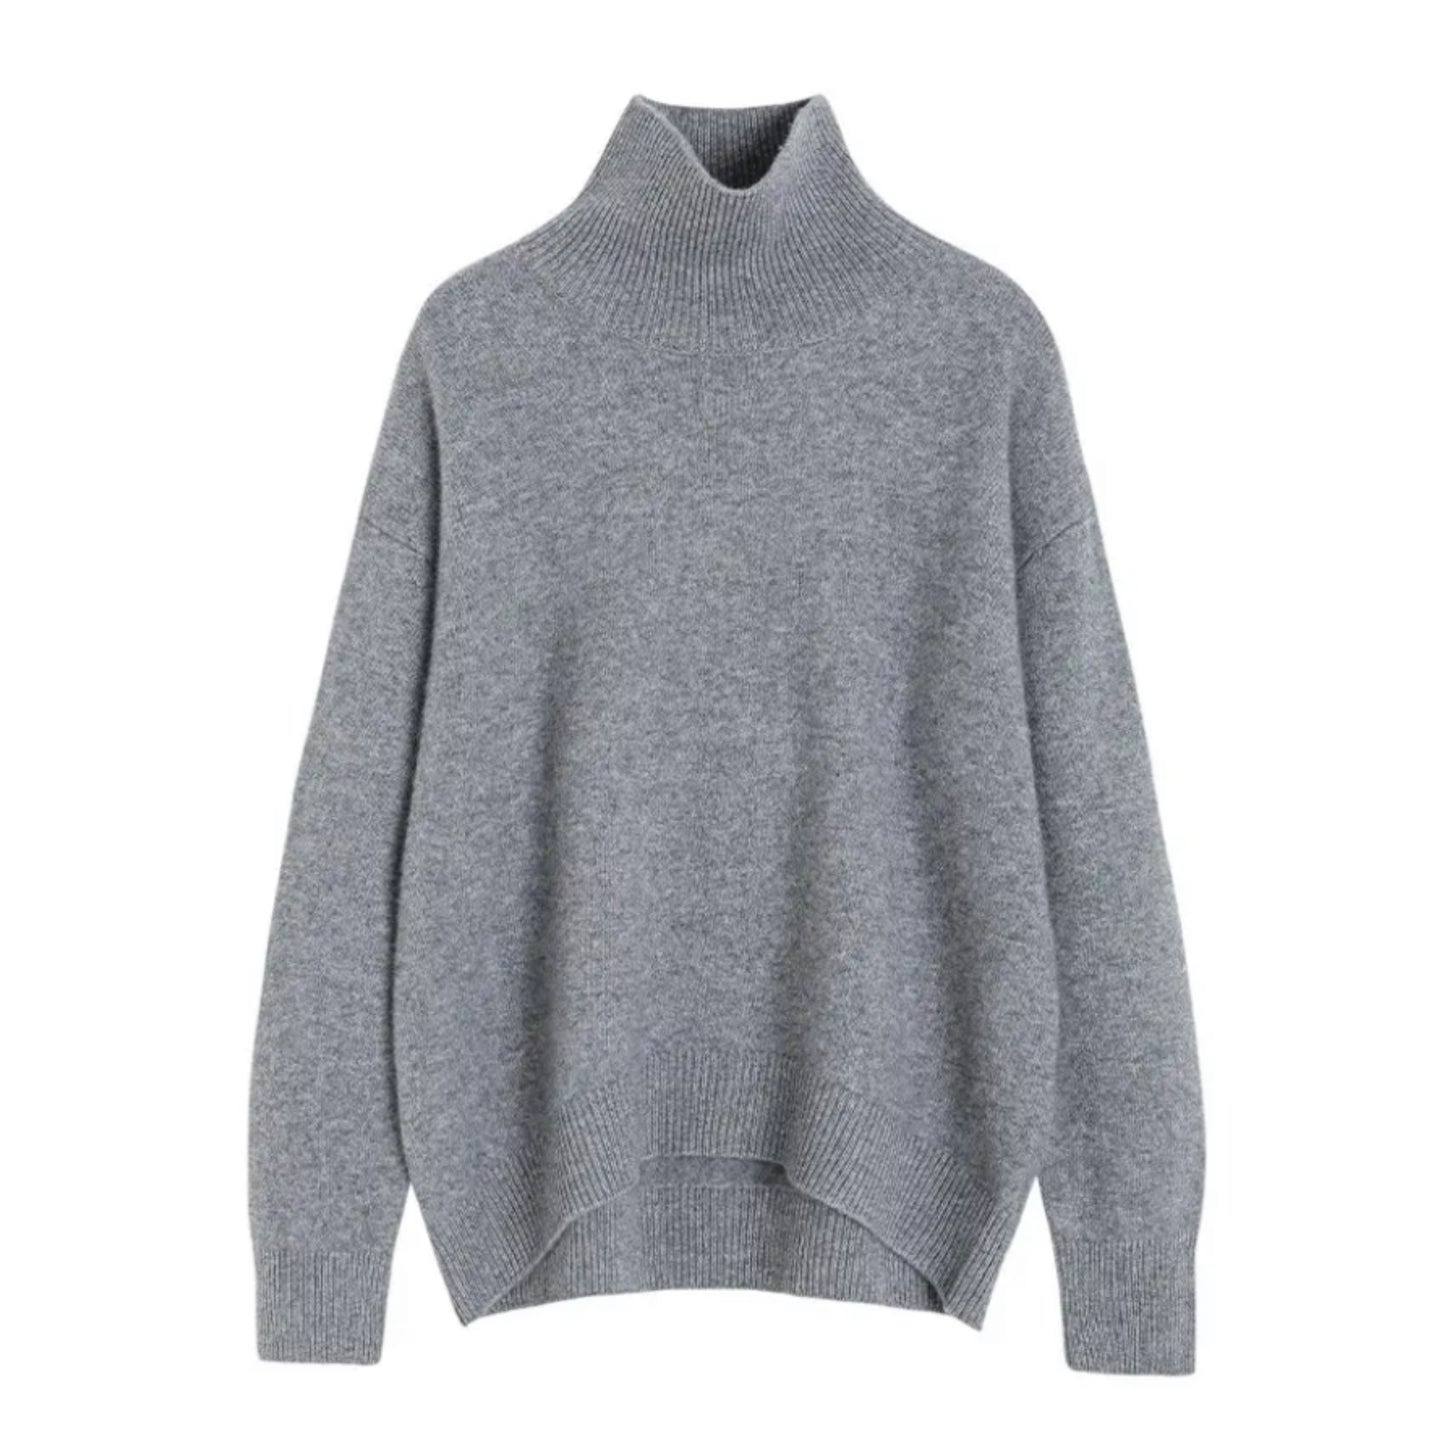 Light Gray Knit Turtleneck Oversized Pull Over Sweater